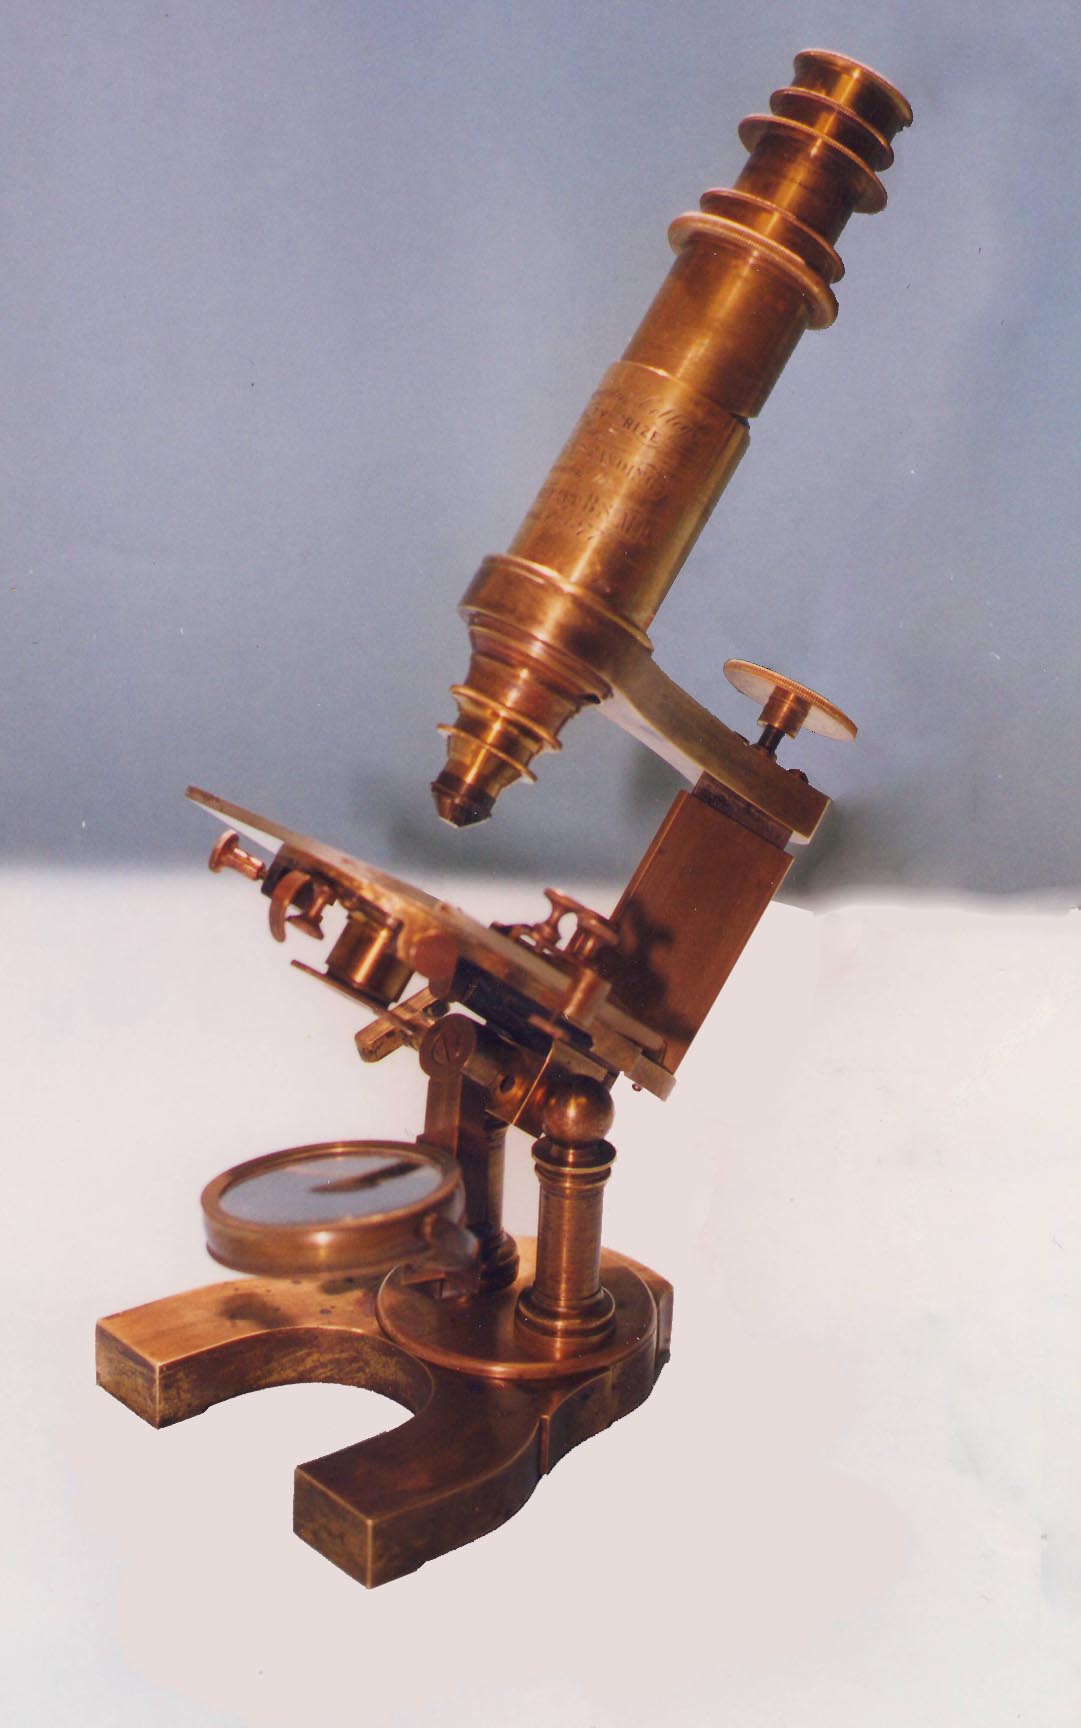 Wale Prize Microscope